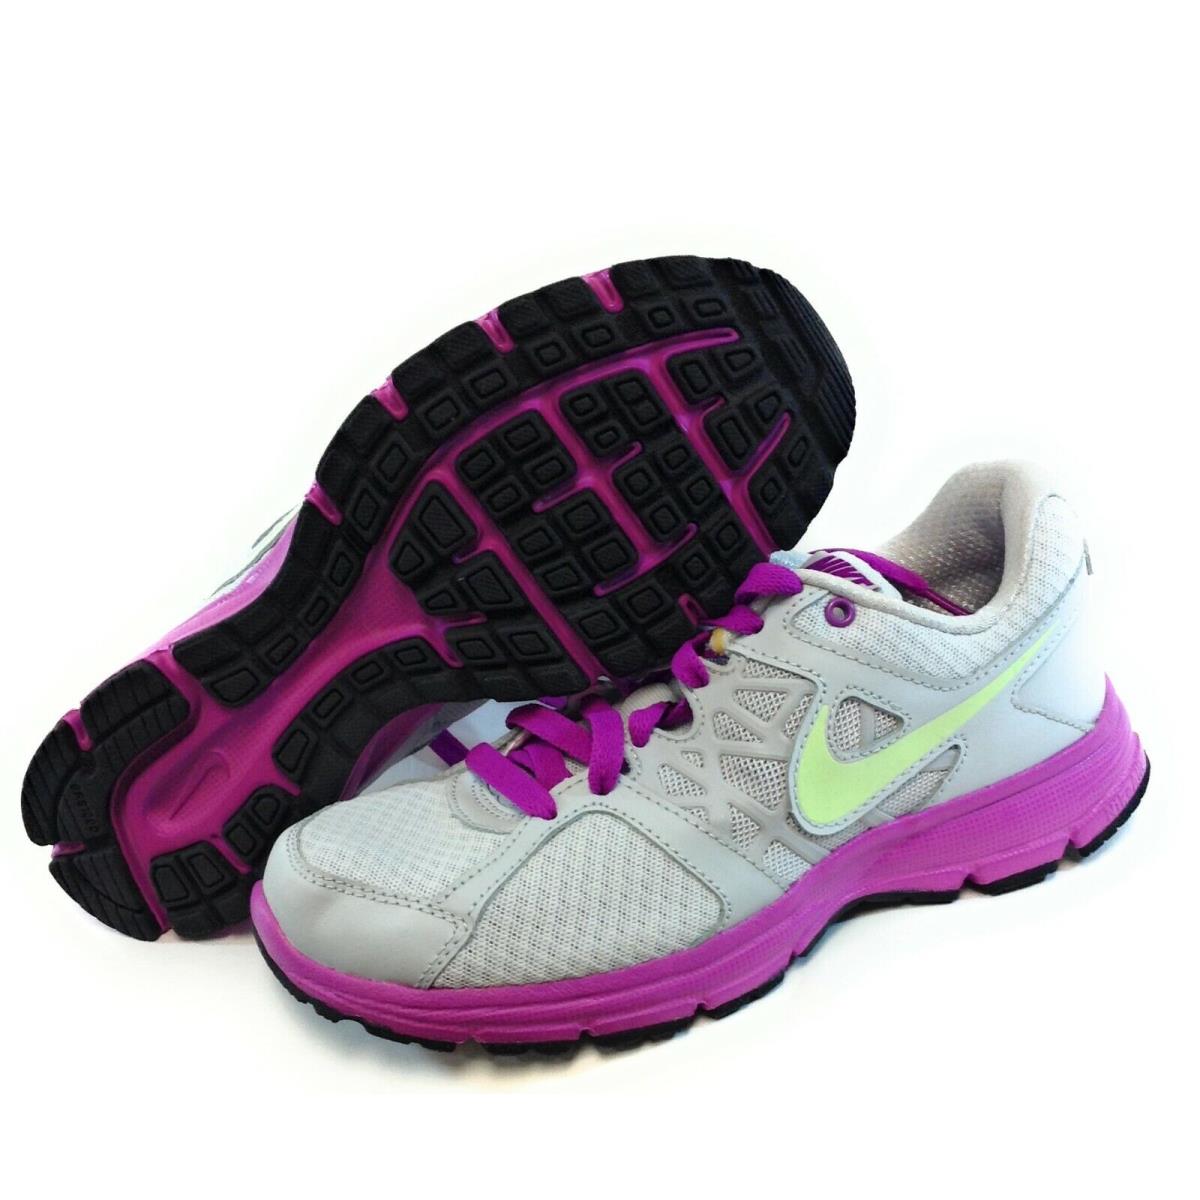 Womens Nike Air Relentless 2 512083 004 Platinum 2012 Deadstock Sneakers Shoes - Platinum